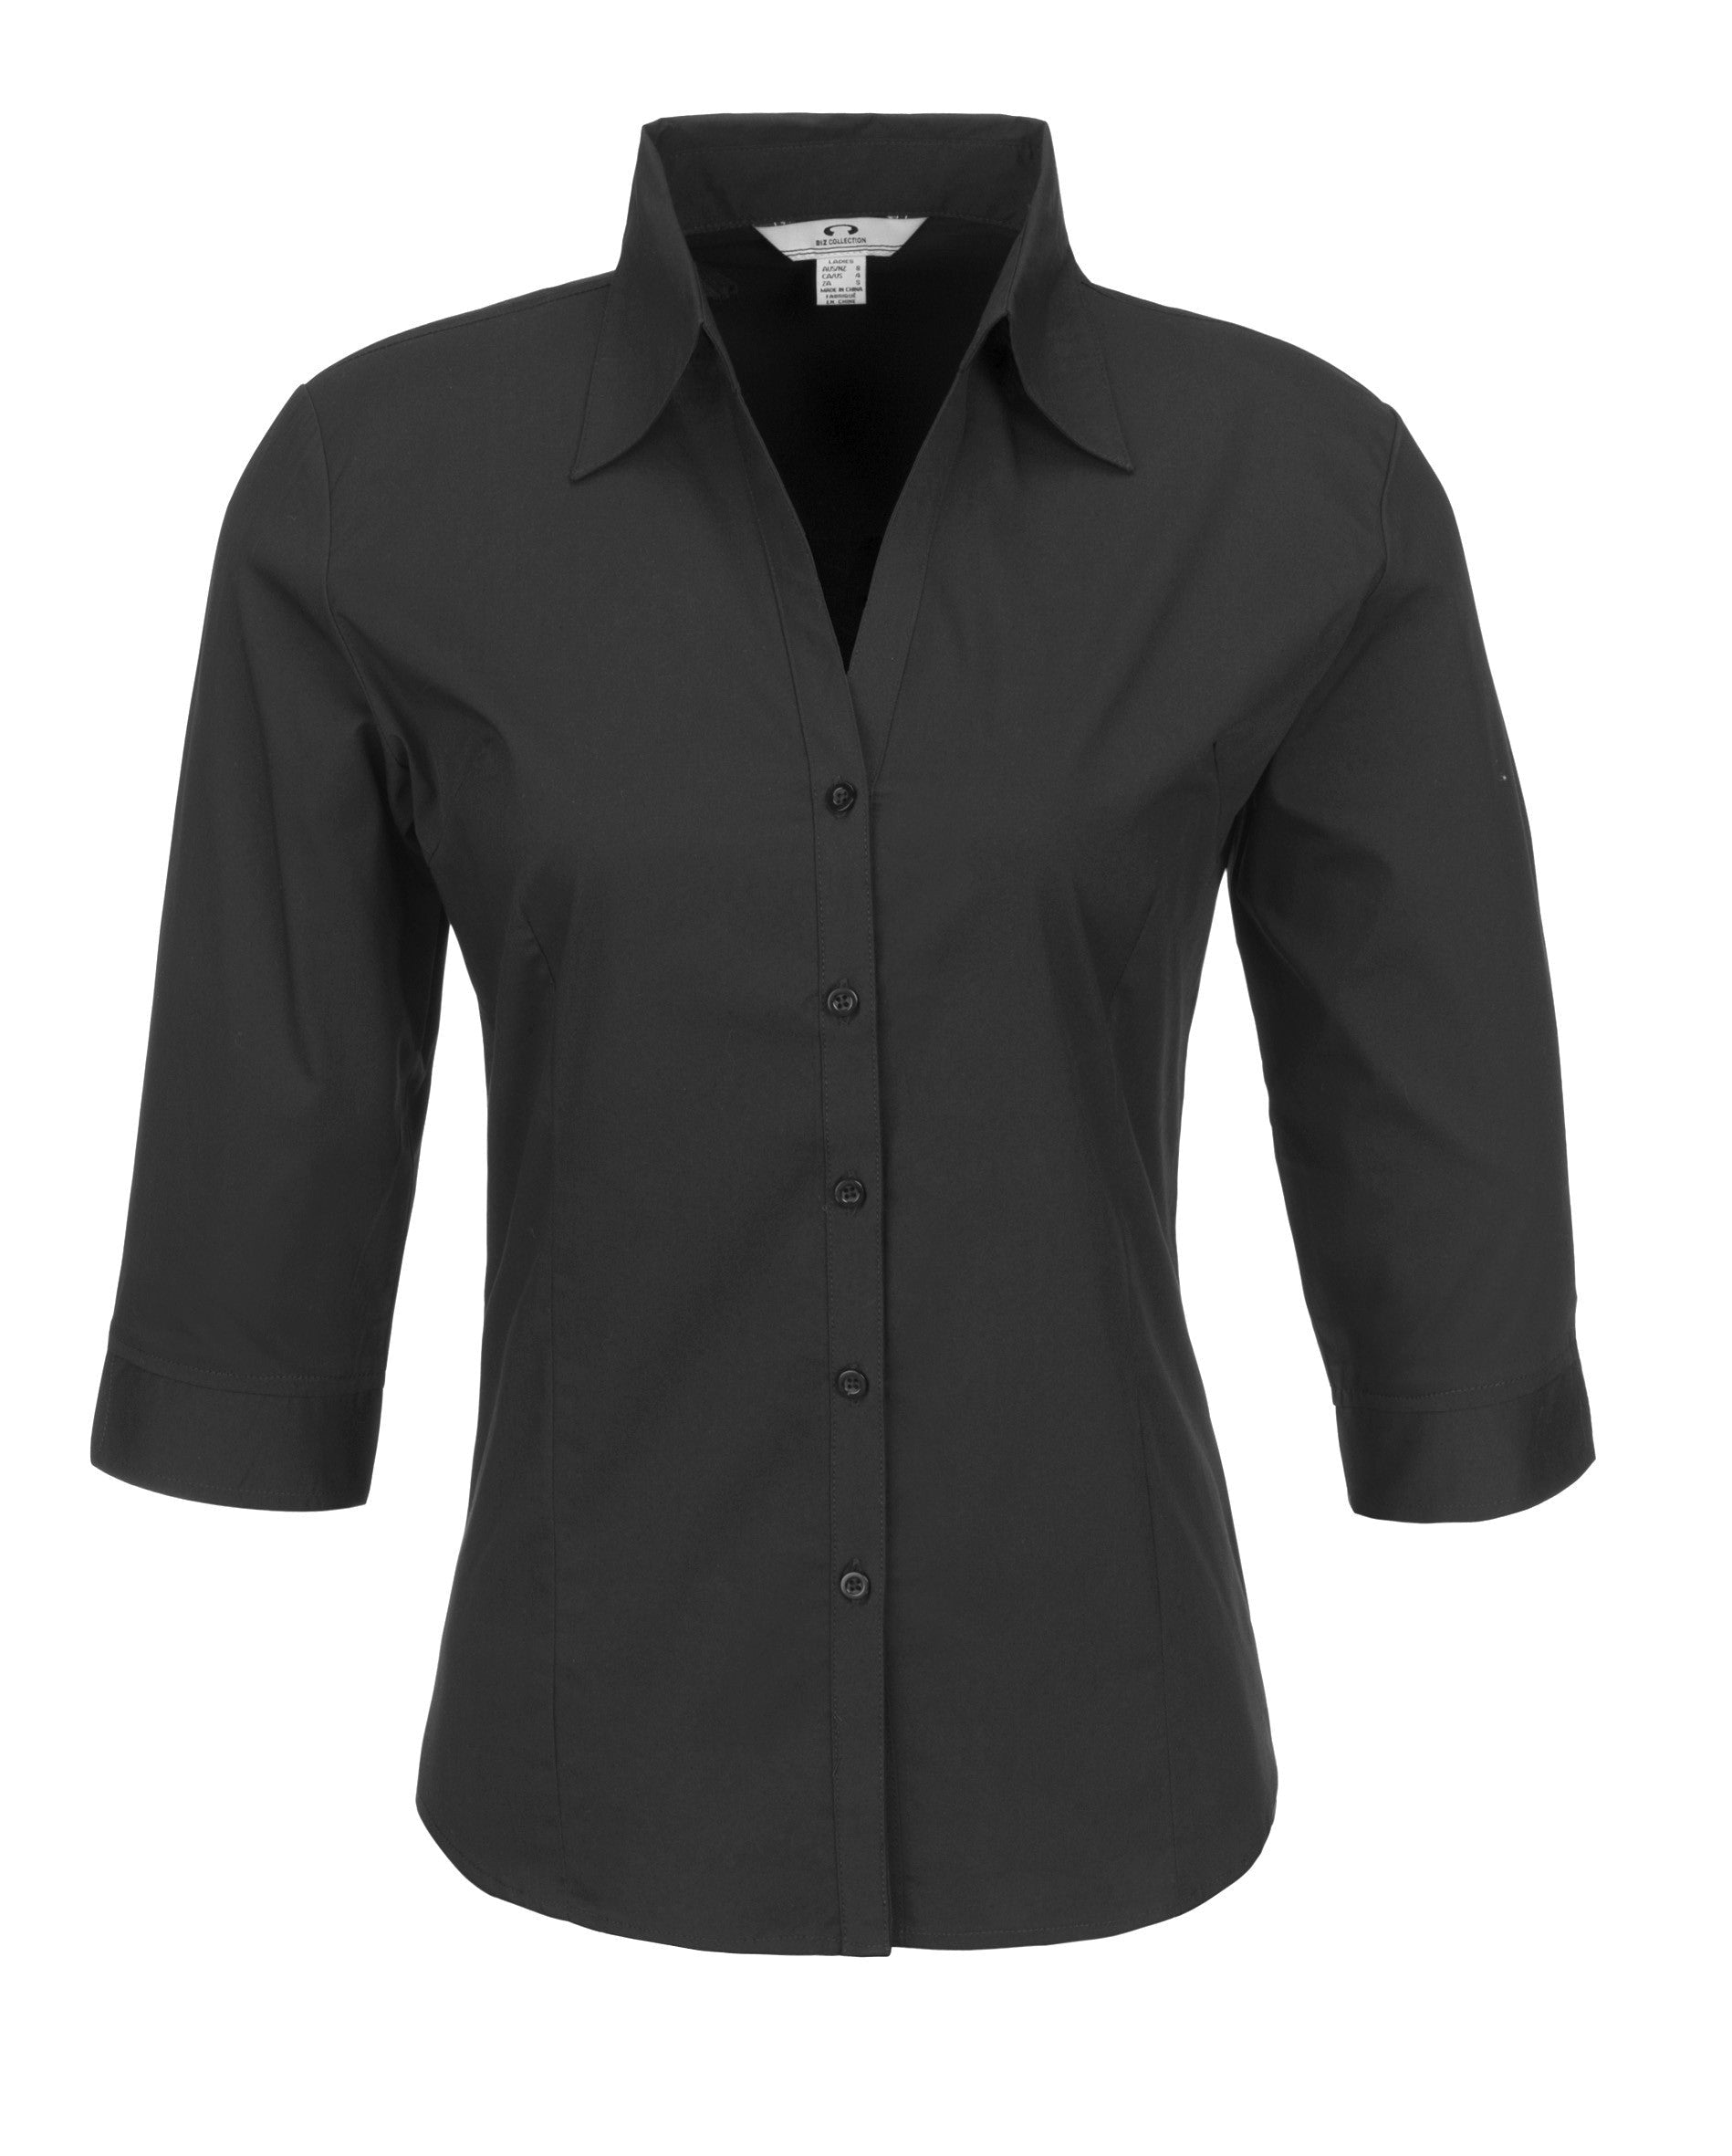 Ladies 3/4 Sleeve Metro Shirt - Black Only-2XL-Black-BL